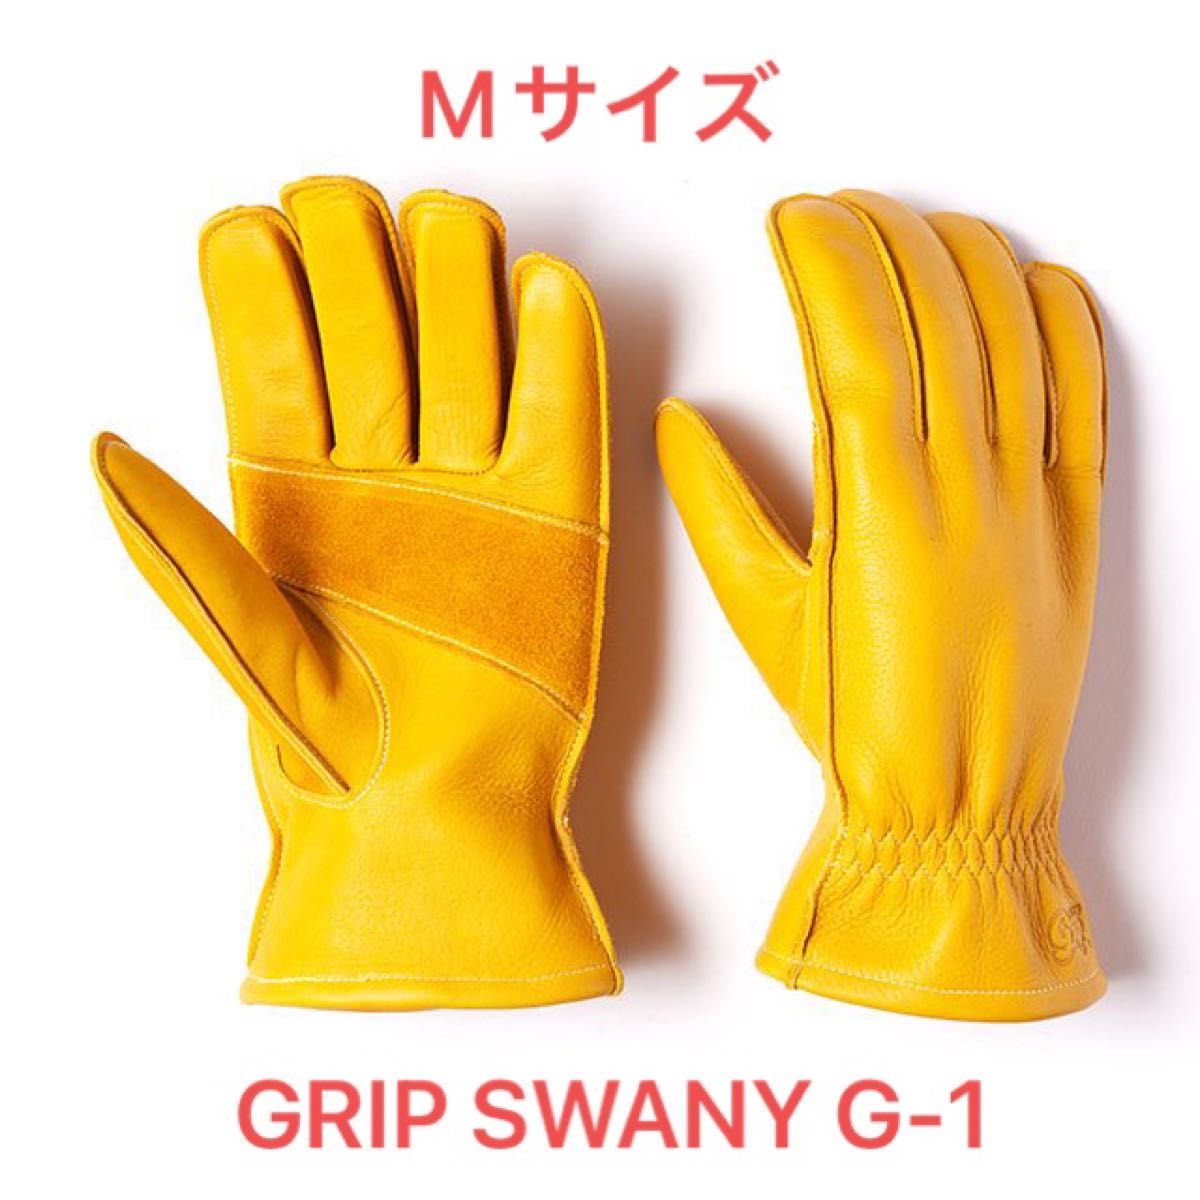 M GRIP SWANY グリップスワニー グローブ ベーシックモデル G-1 - beringtime.in